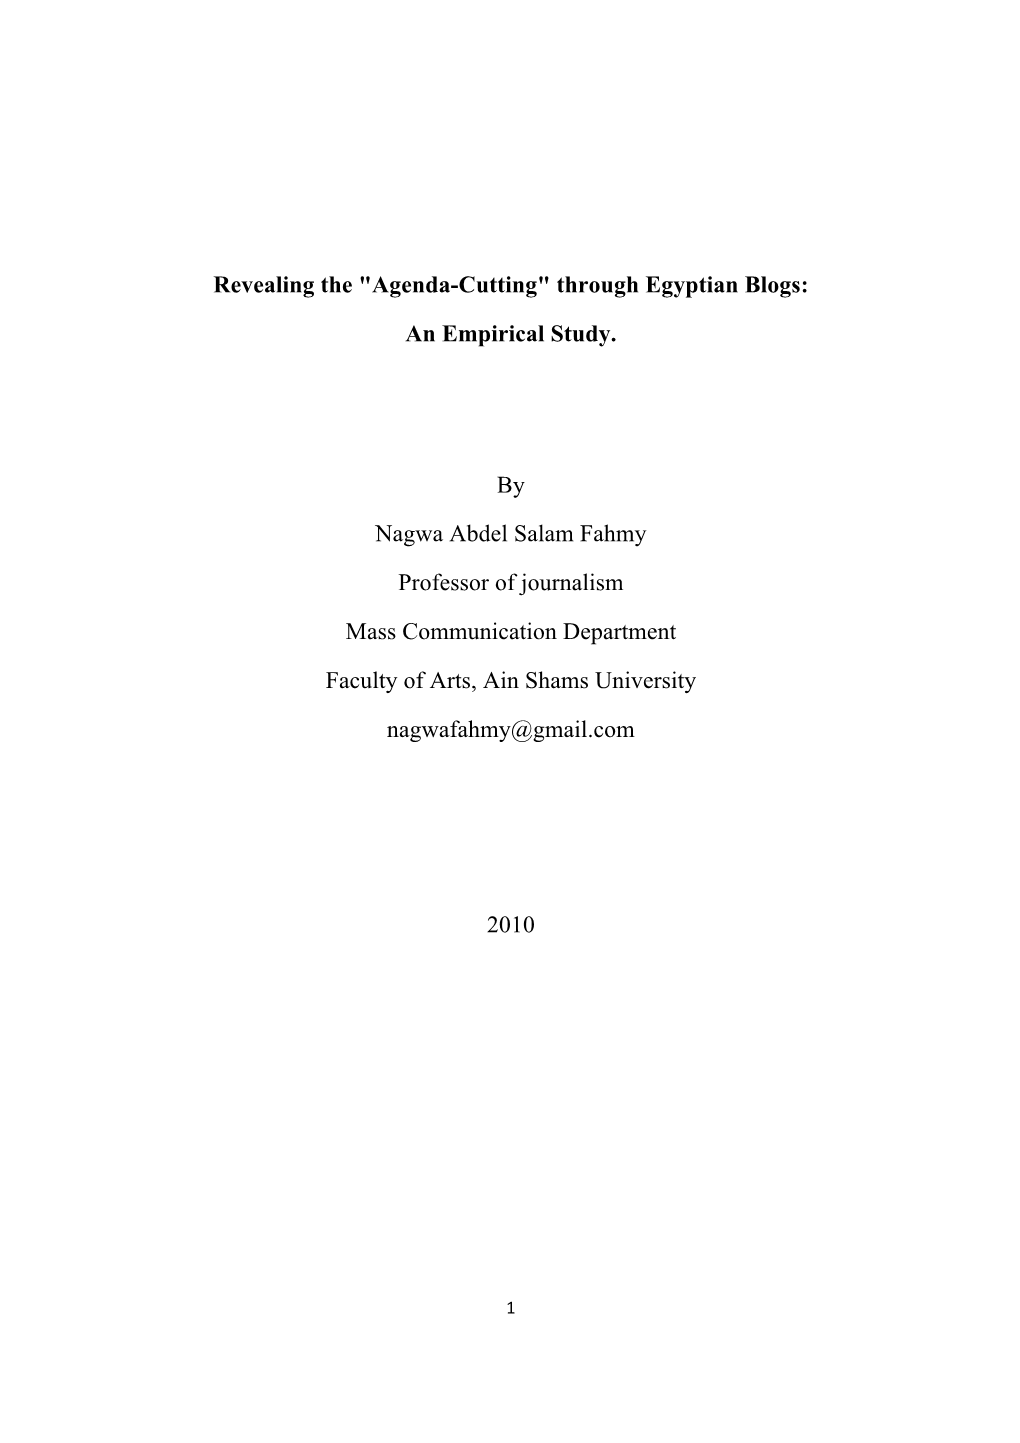 Agenda-Cutting" Through Egyptian Blogs